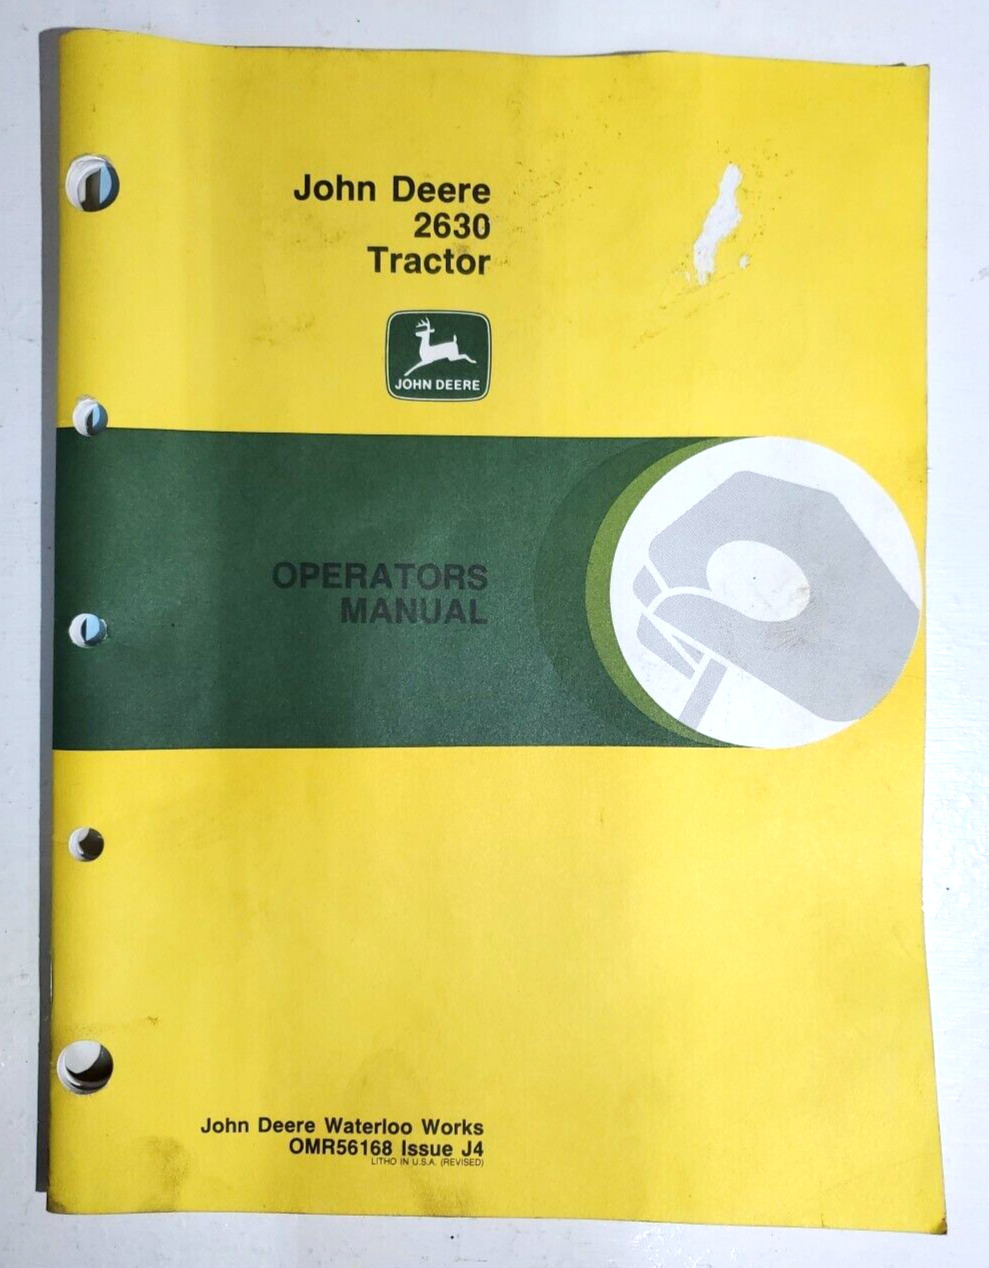 Vintage John Deere 2630 Tractor Operator's Manual OMR56268 Issue J4